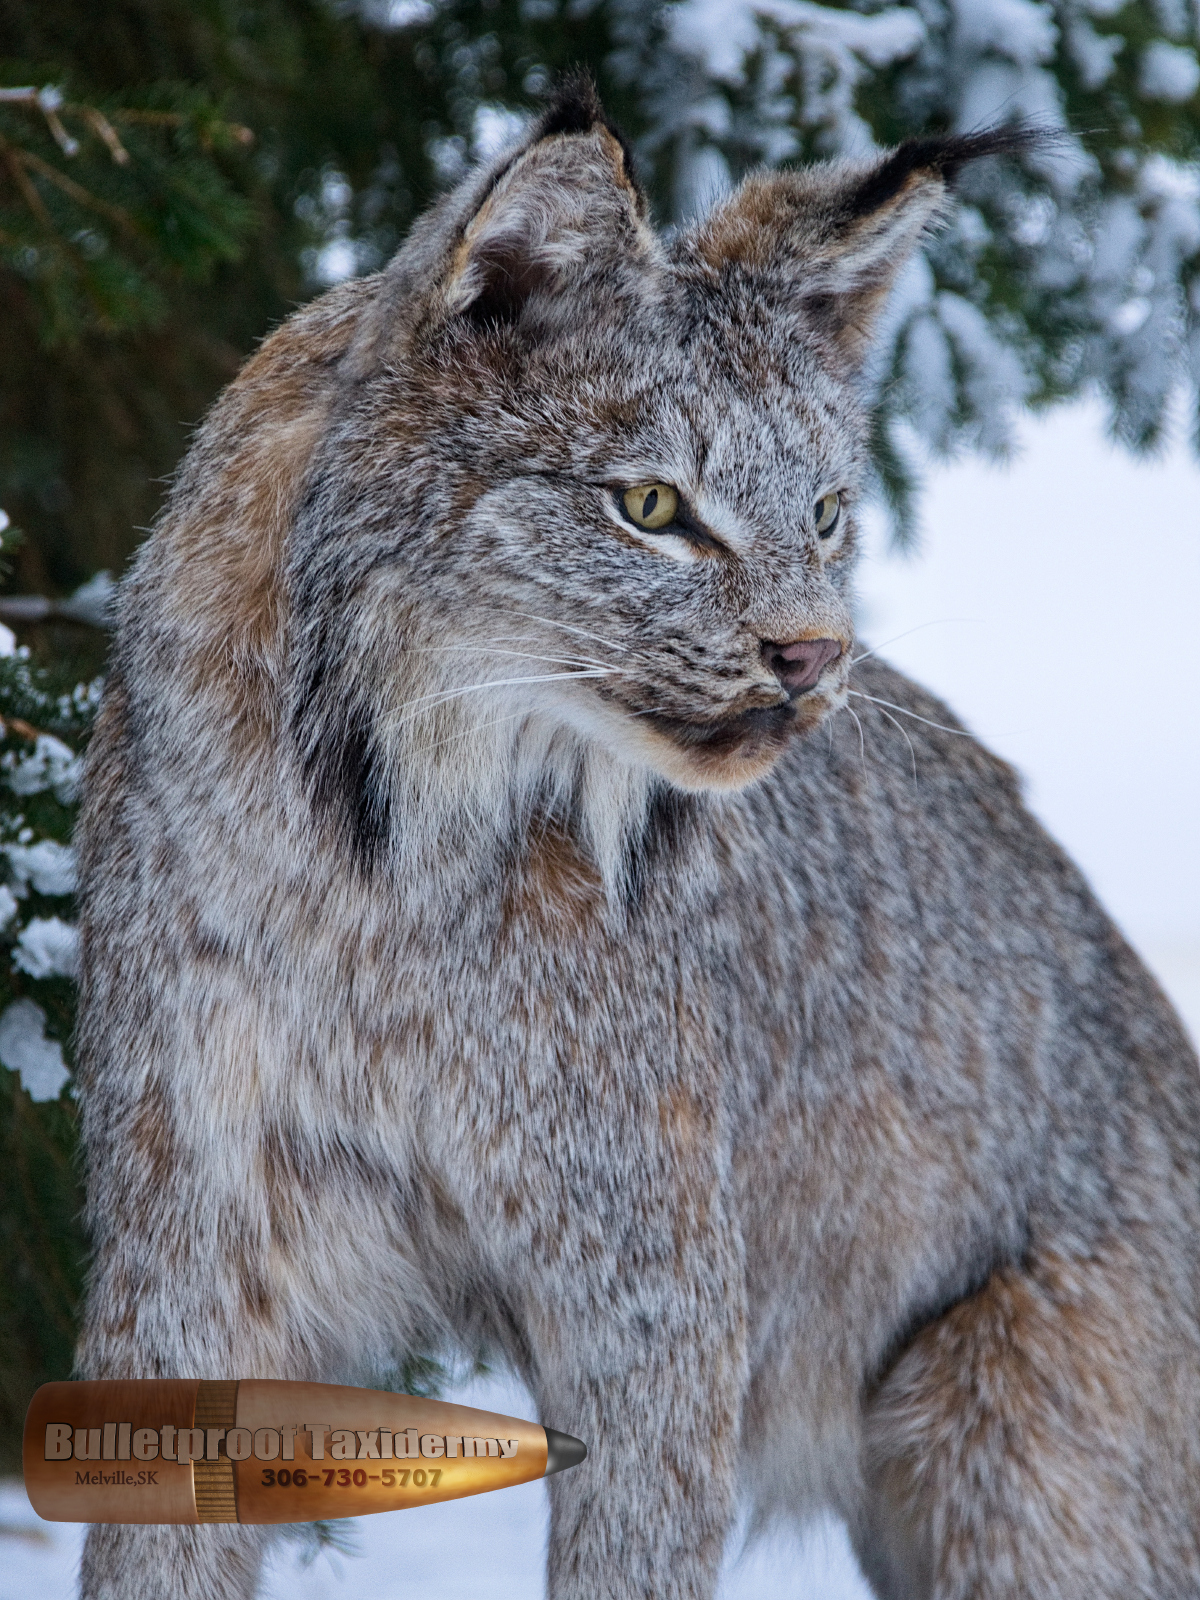 Lynx by Bulletproof Taxidermy- Melville, SK - Canada